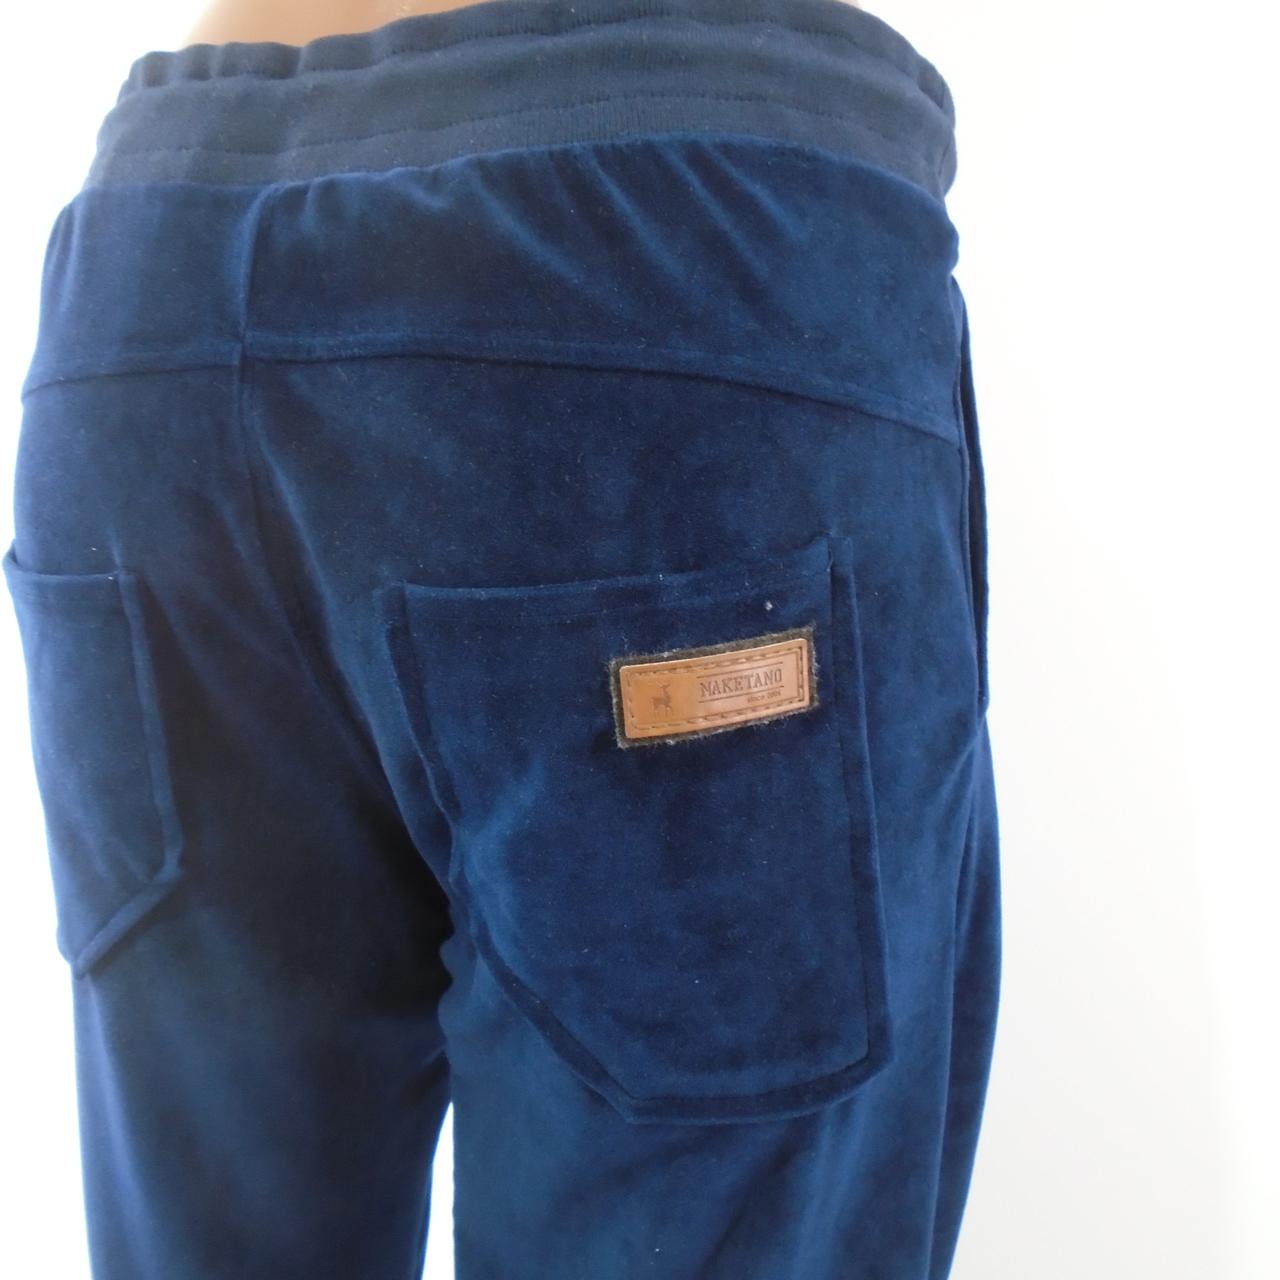 Pantalones de mujer Naketano. Azul oscuro. S. Usado. Satisfactorio